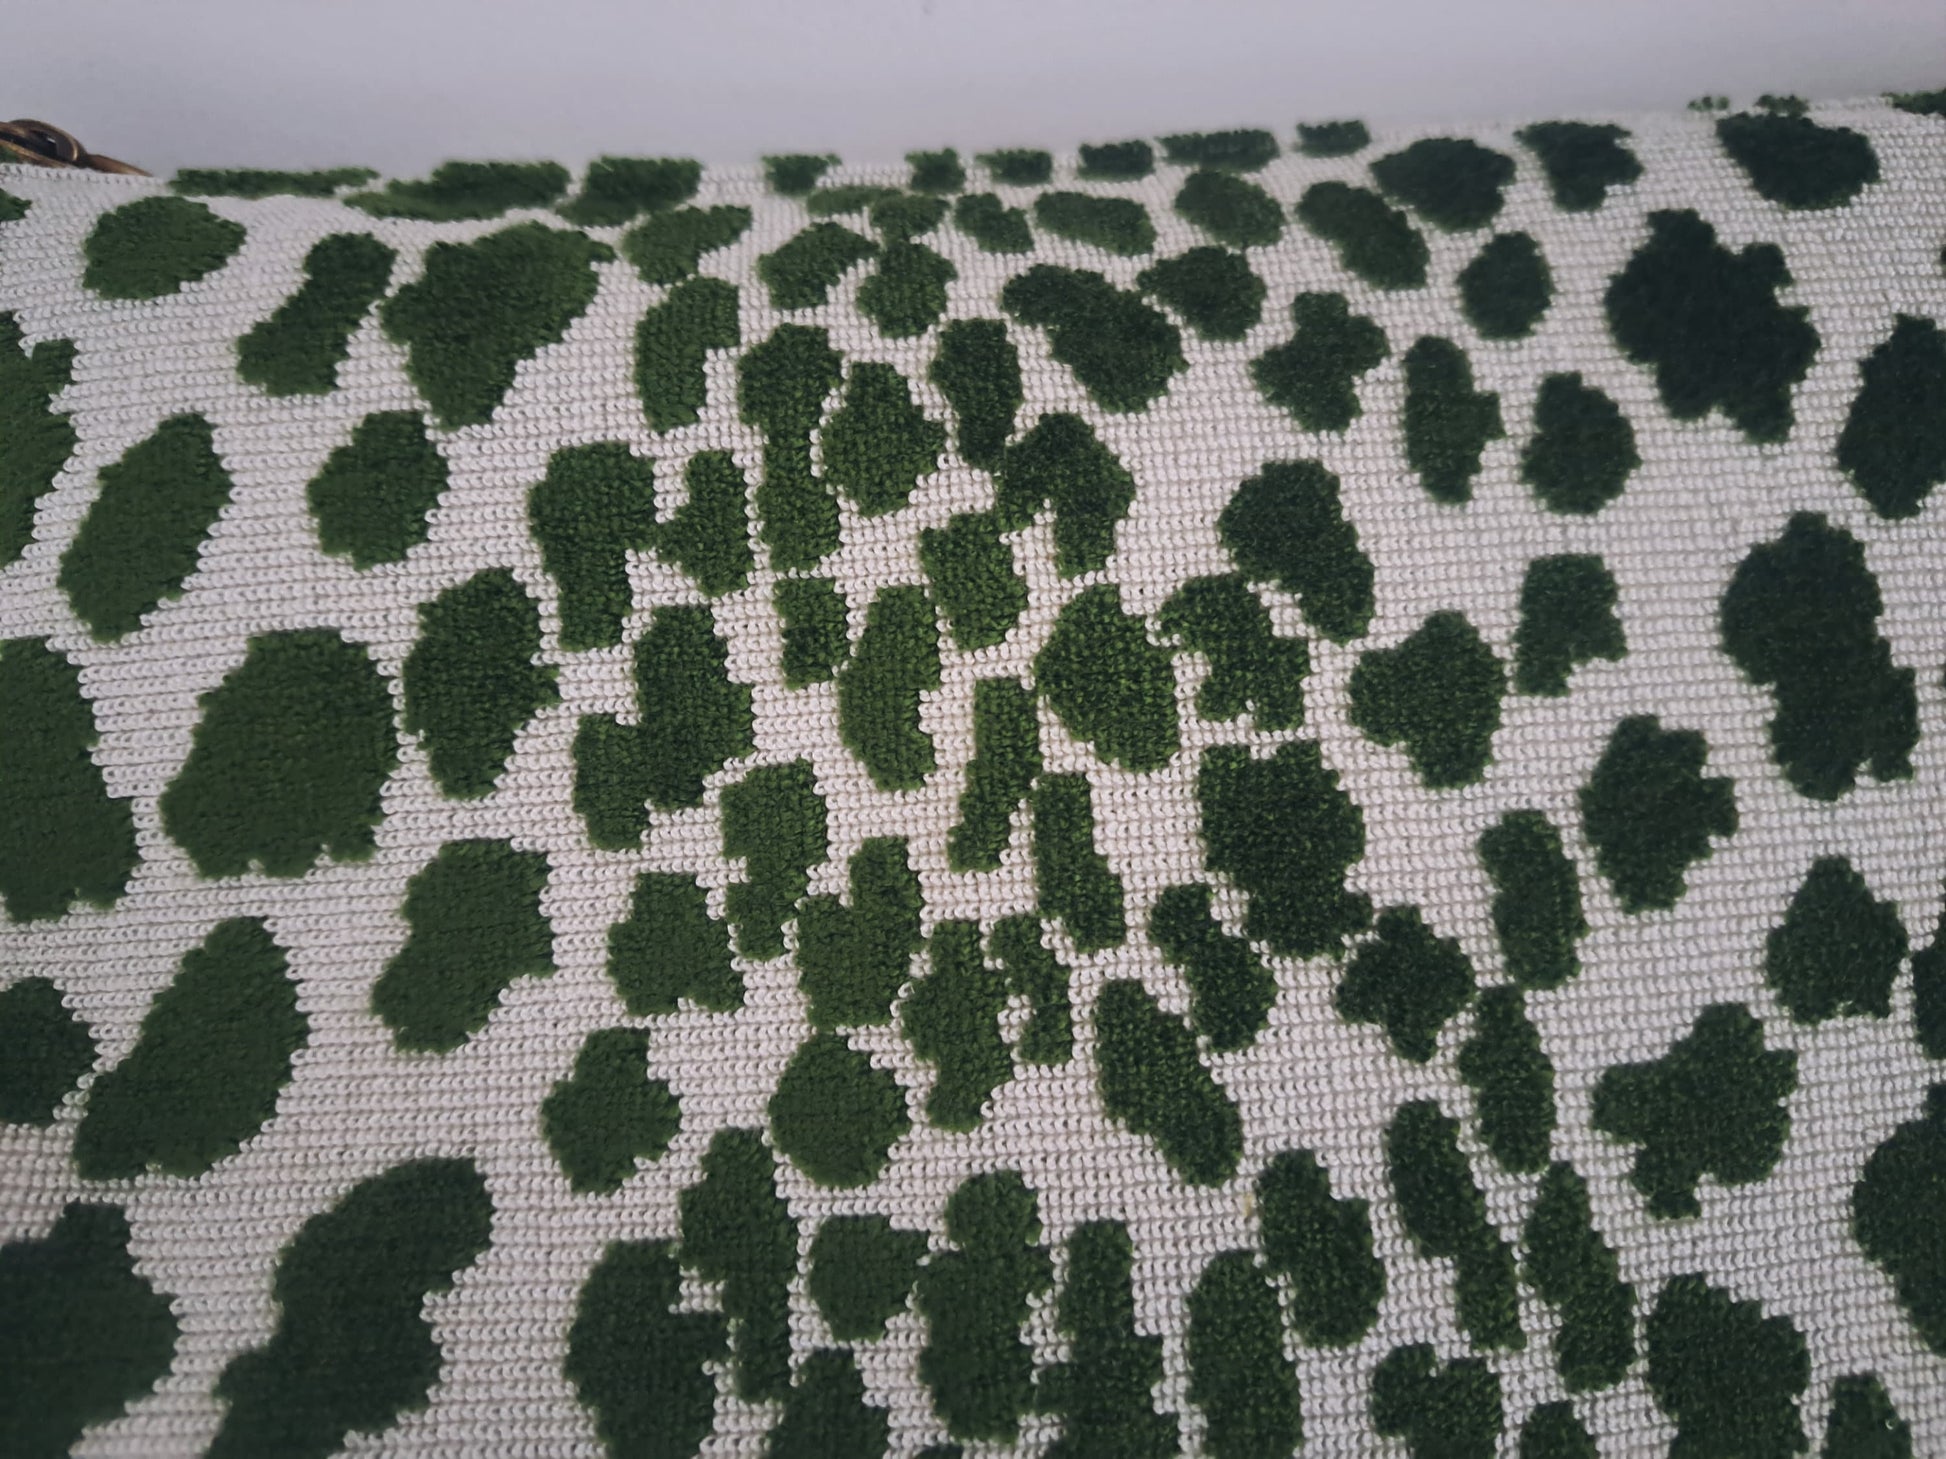 Velvet Green Leapard Print Clutch Bag